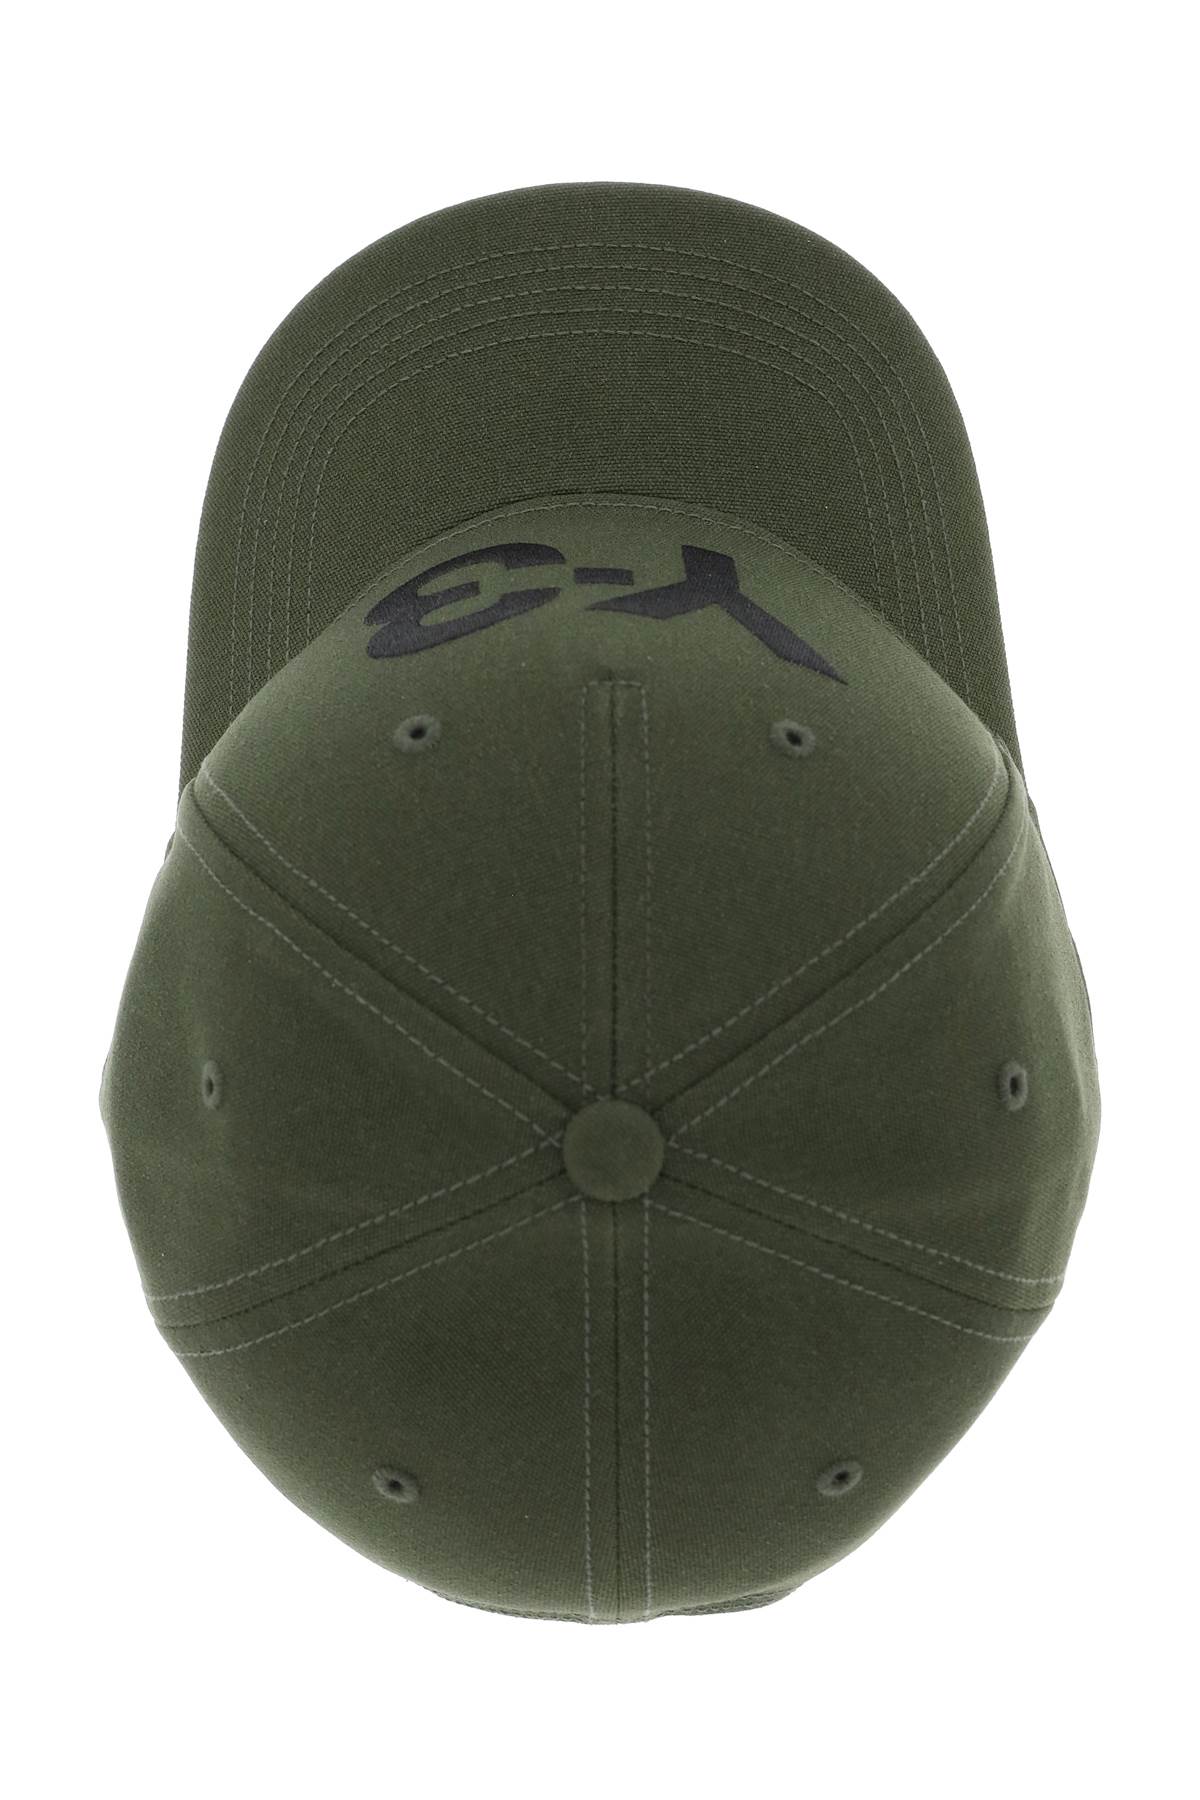 Y-3 Y-3 baseball cap with logo embroidery